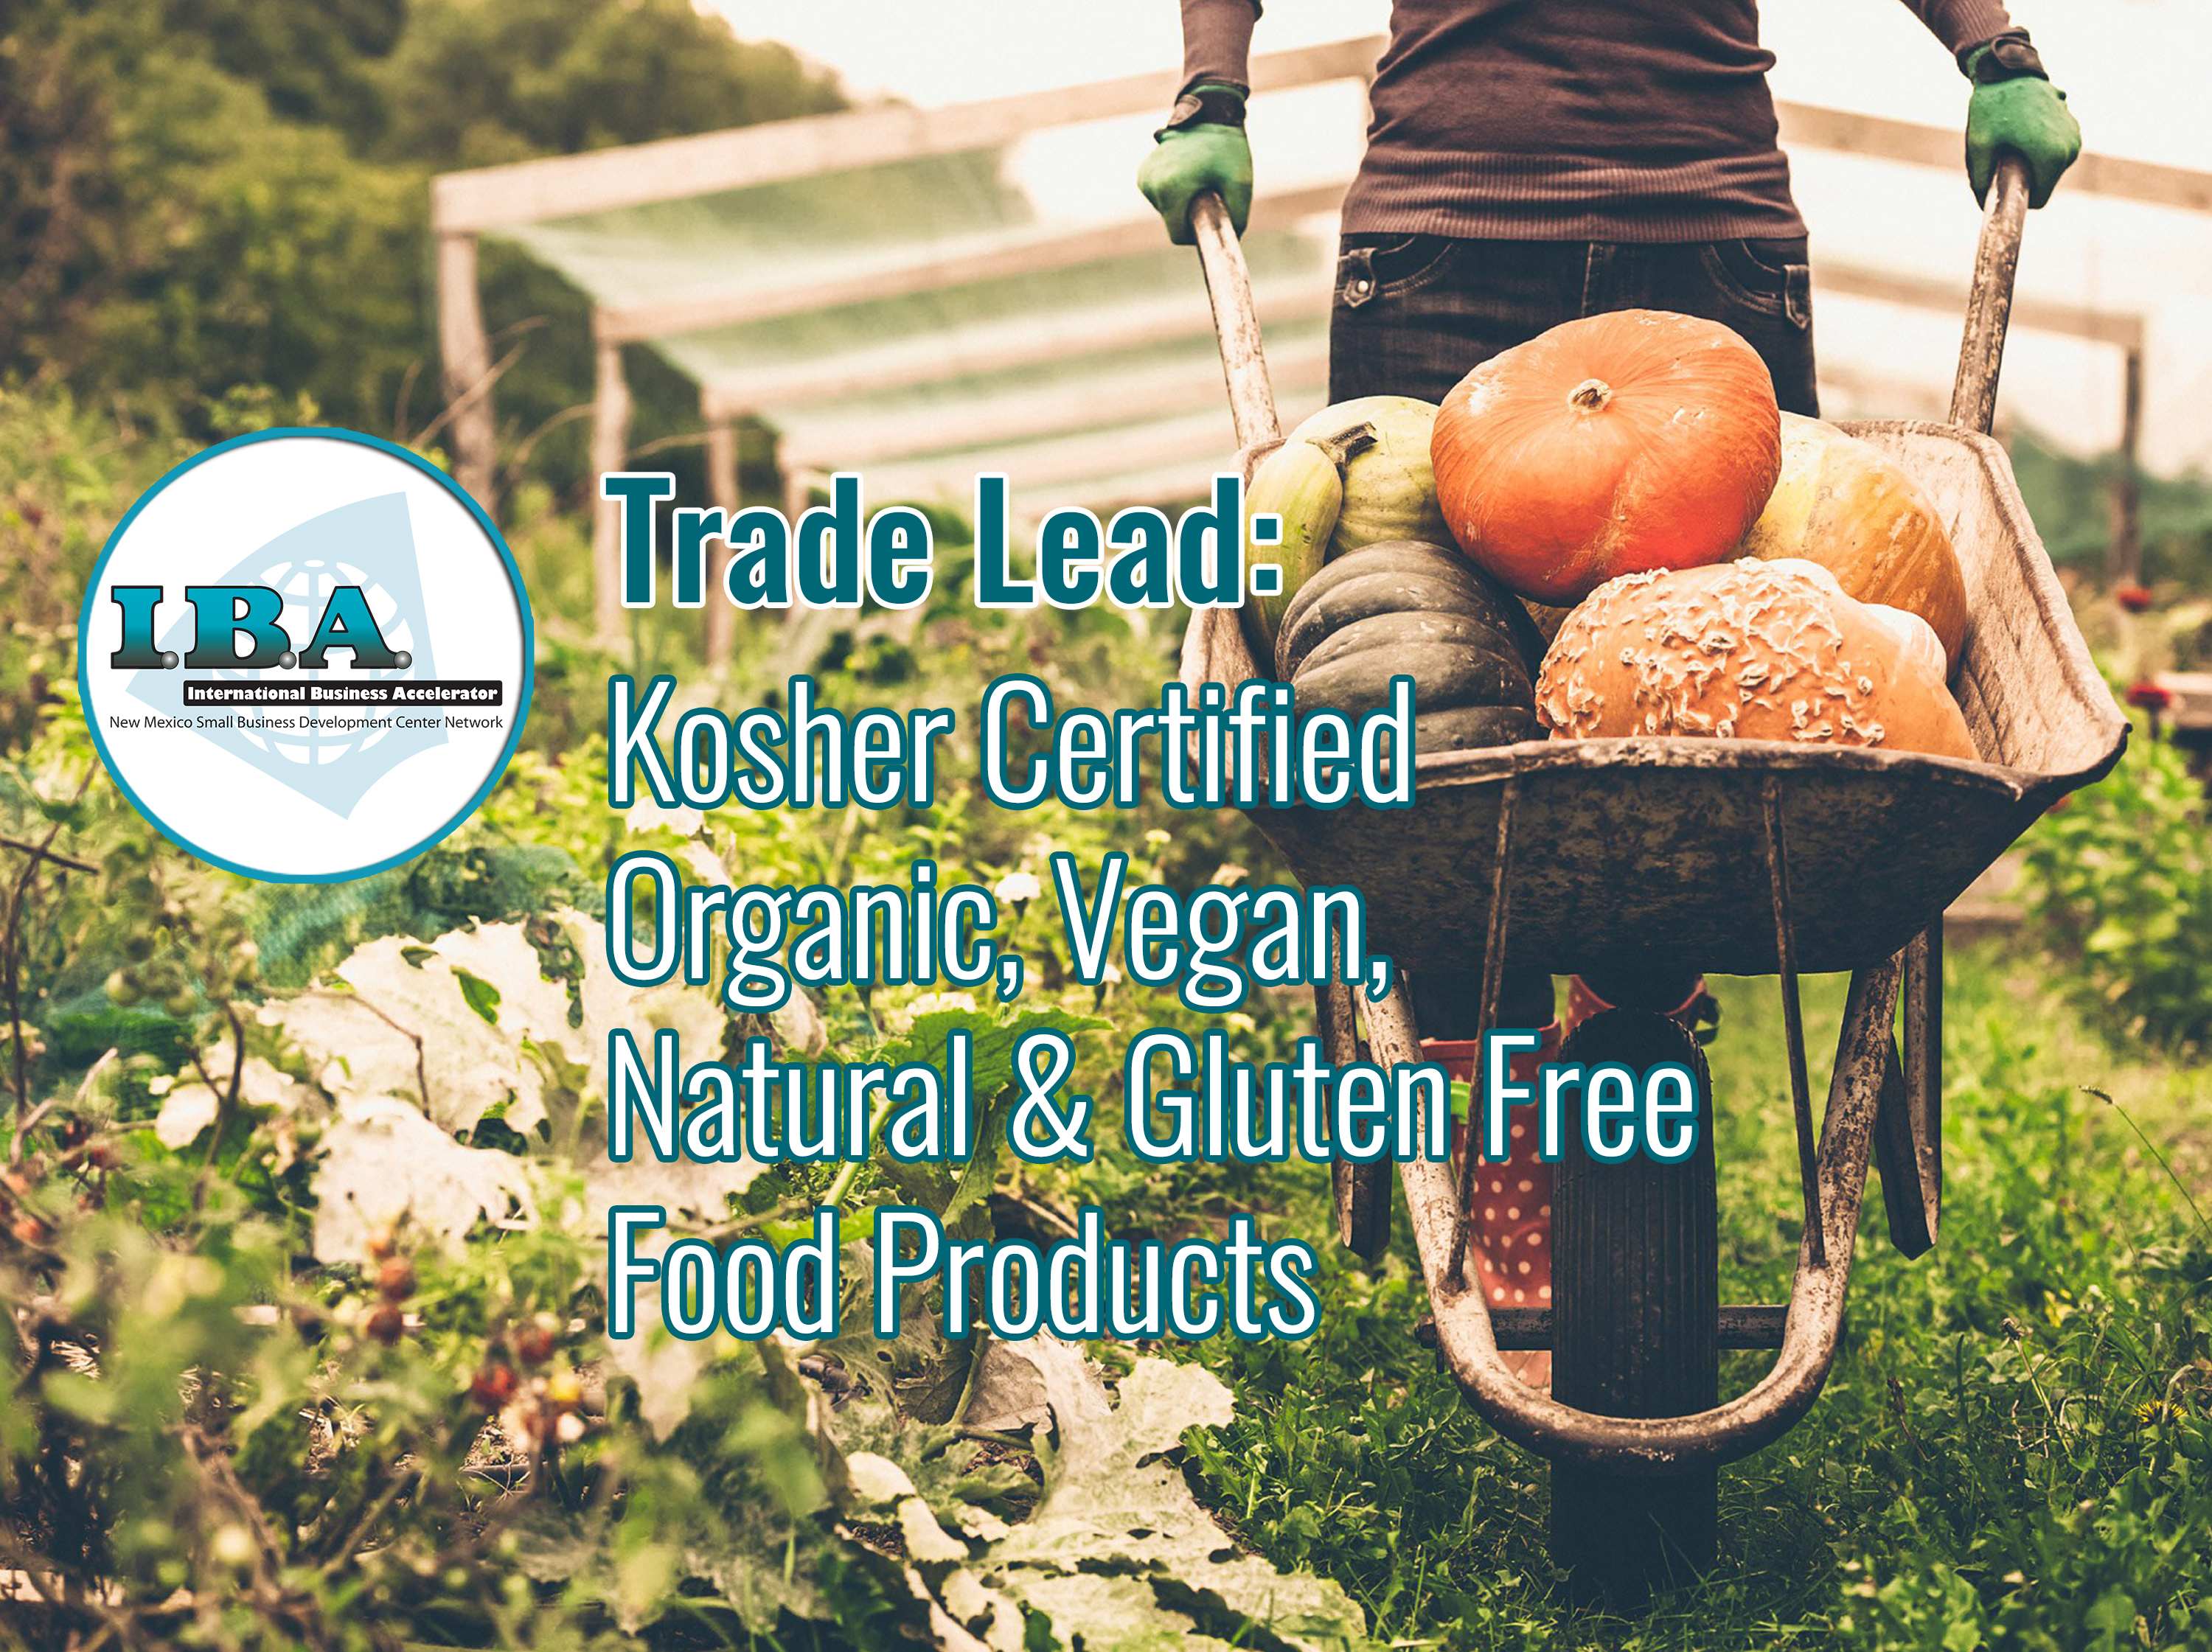 Trade Lead – Kosher, Organic, Vegan, Natural & Gluten Free Food Products